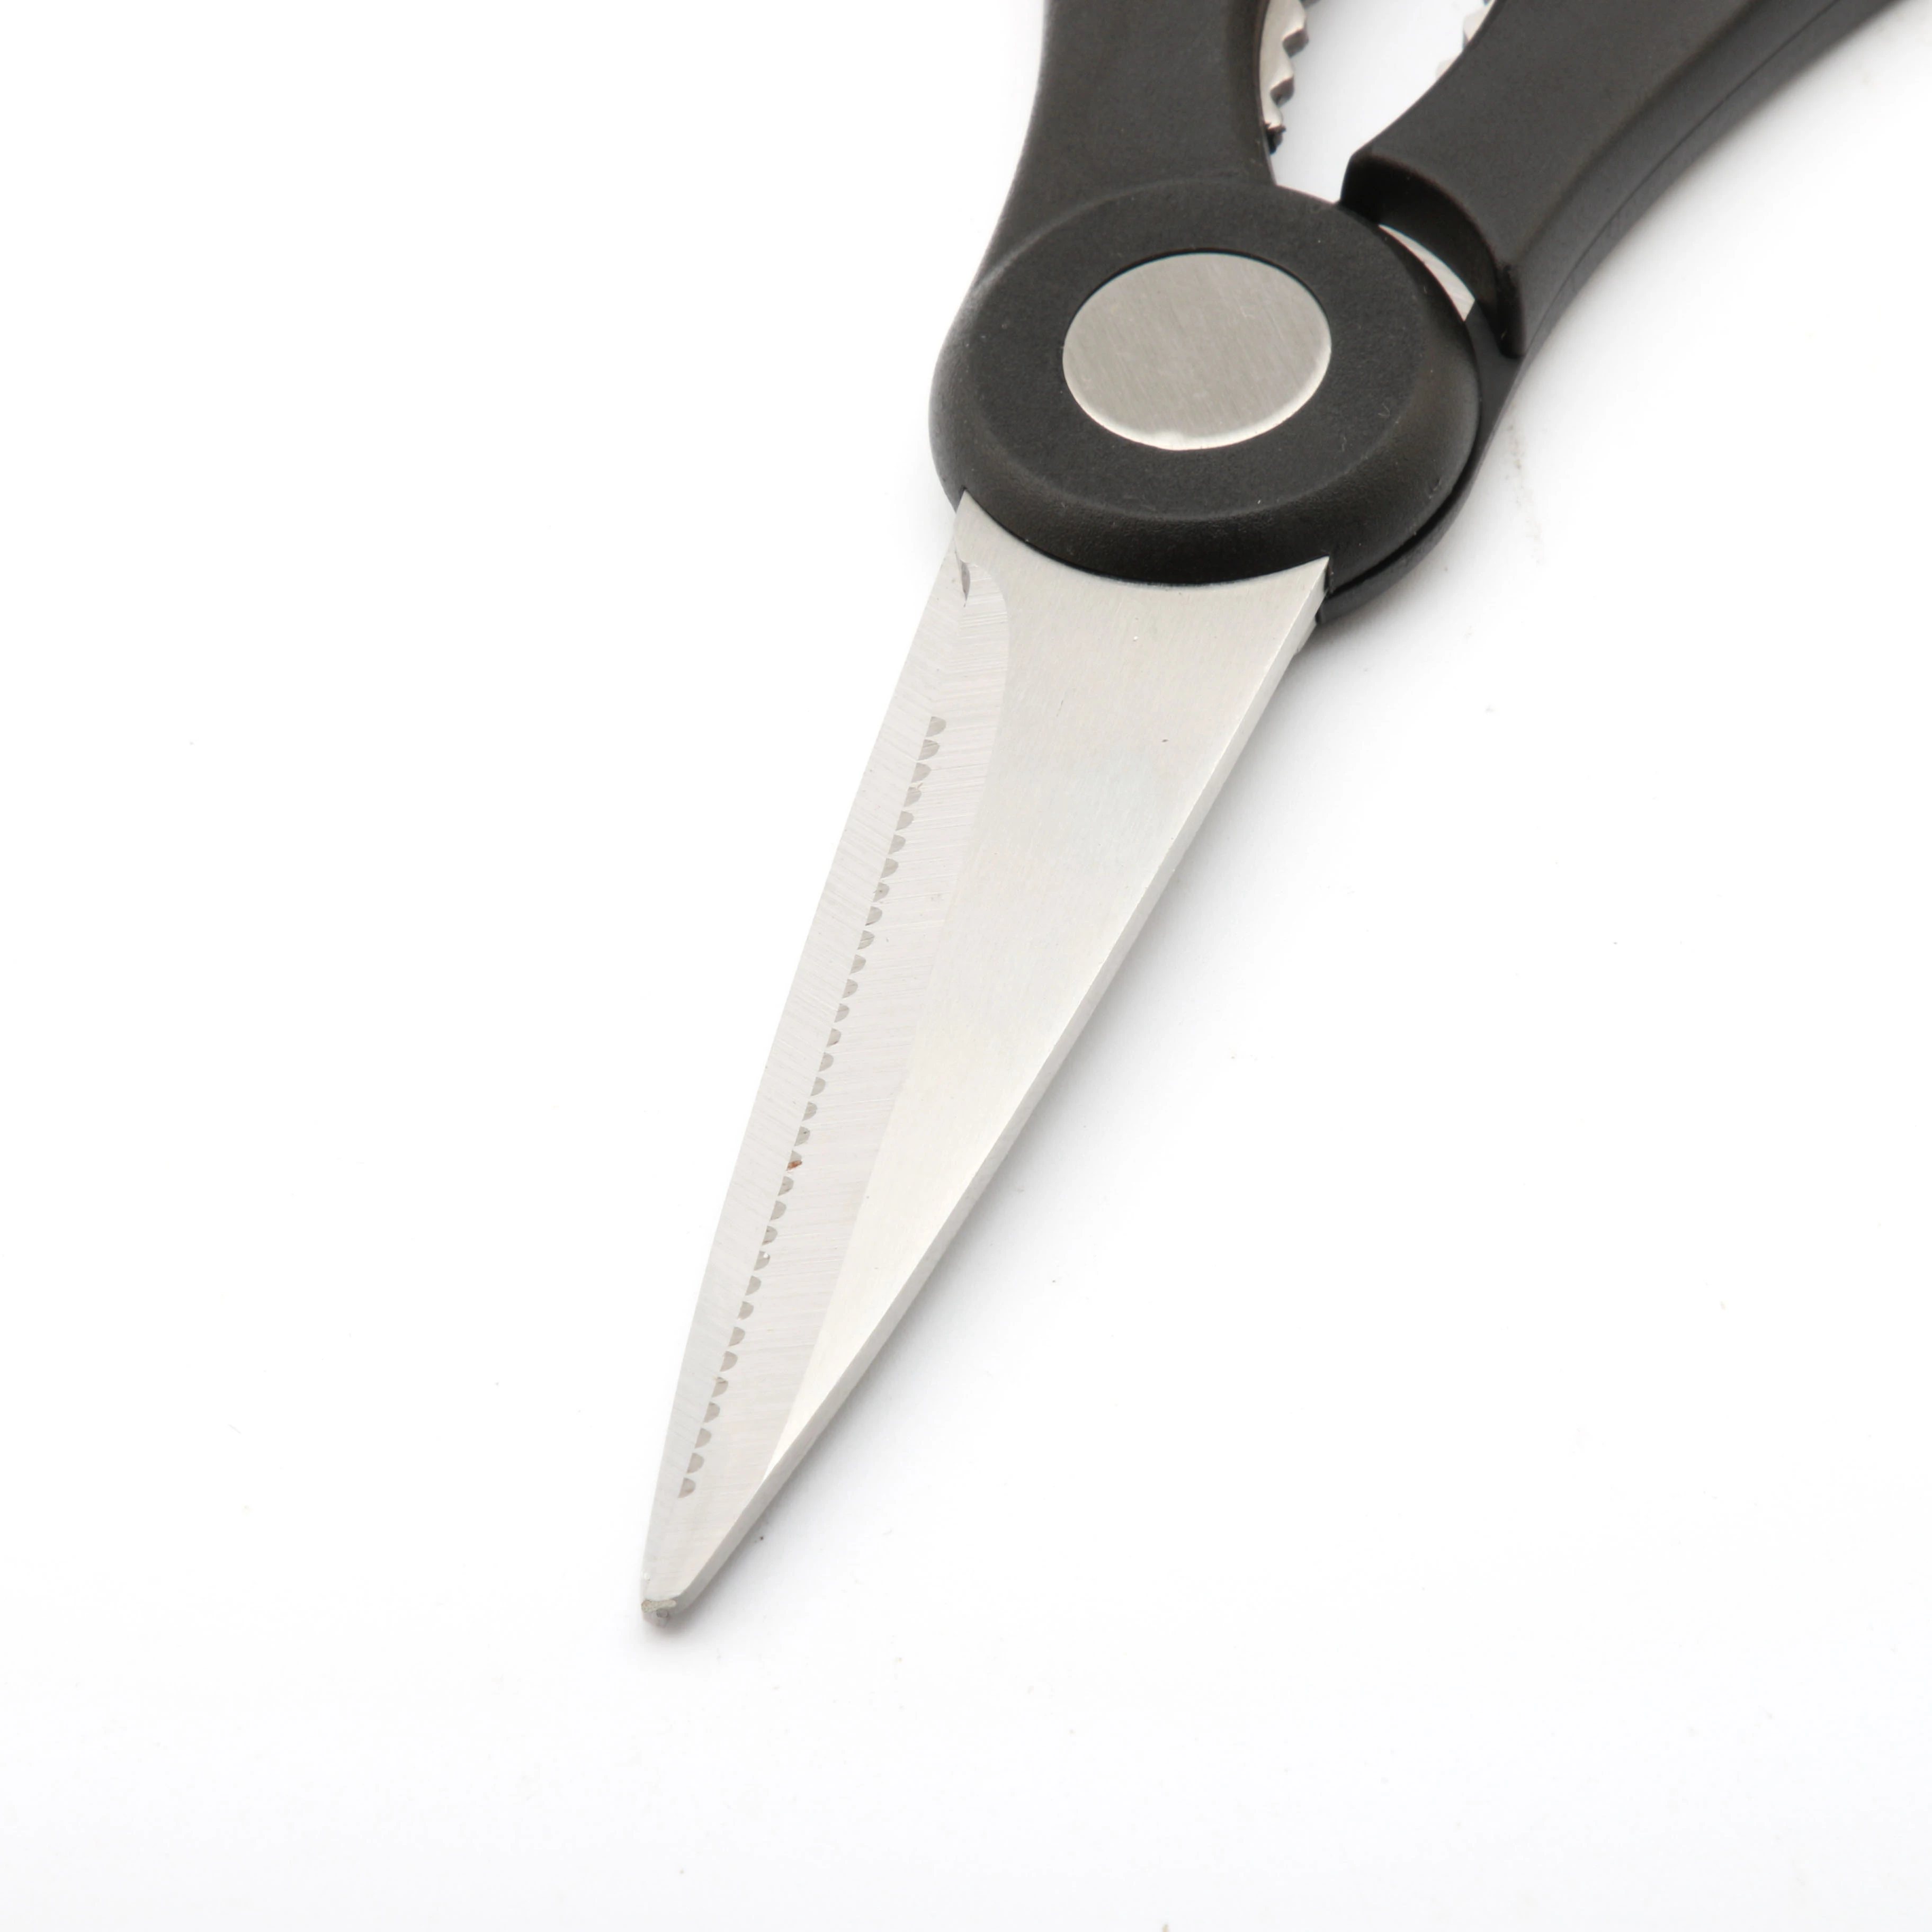 Ultra Sharp Multi-purpose Stainless Steel Kitchen Scissors for Kitchen